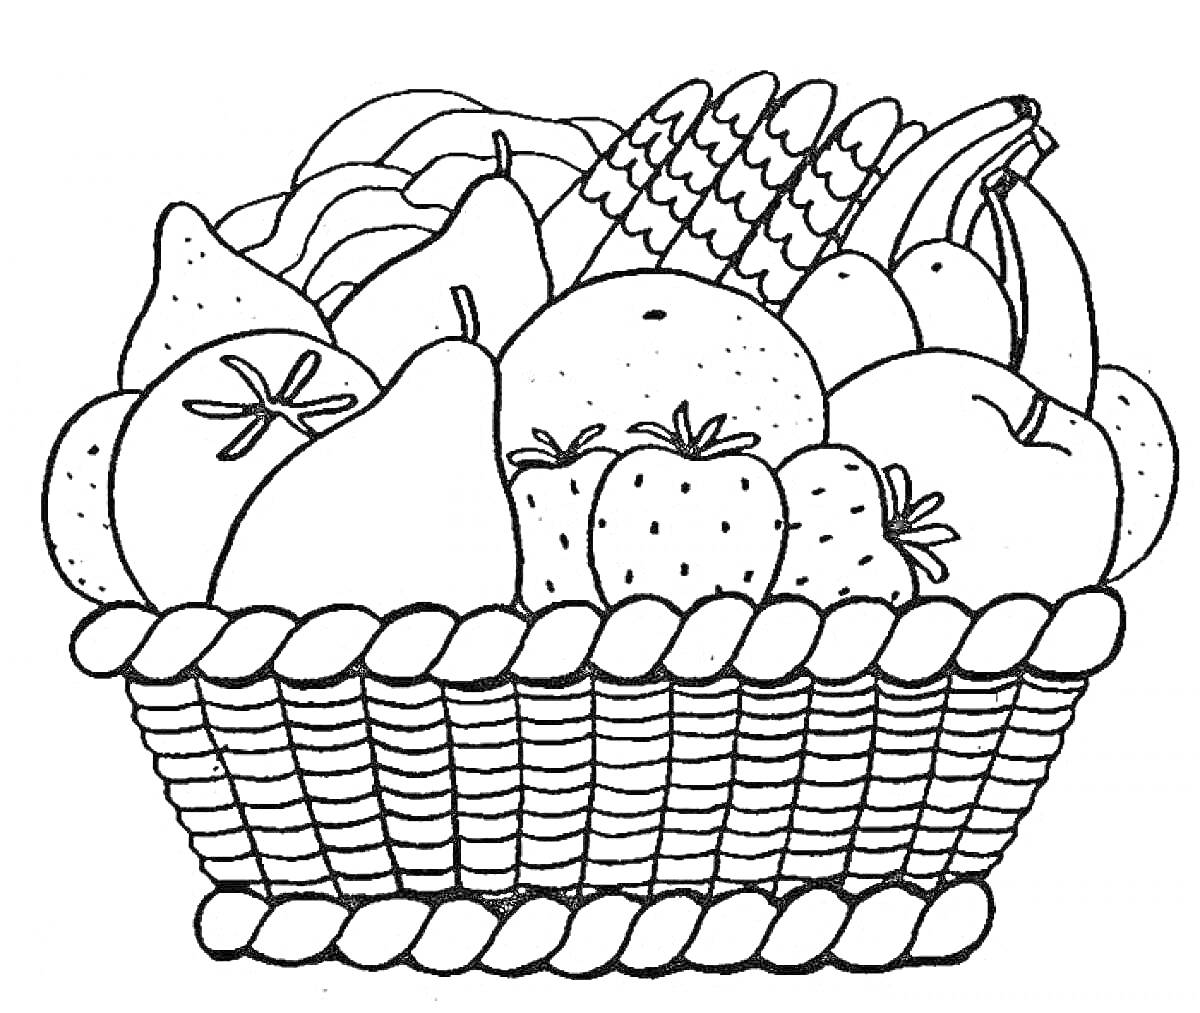 Корзина с фруктами и овощами (груши, апельсин, арбуз, кукуруза, банан, клубника, яблоко, баклажан)